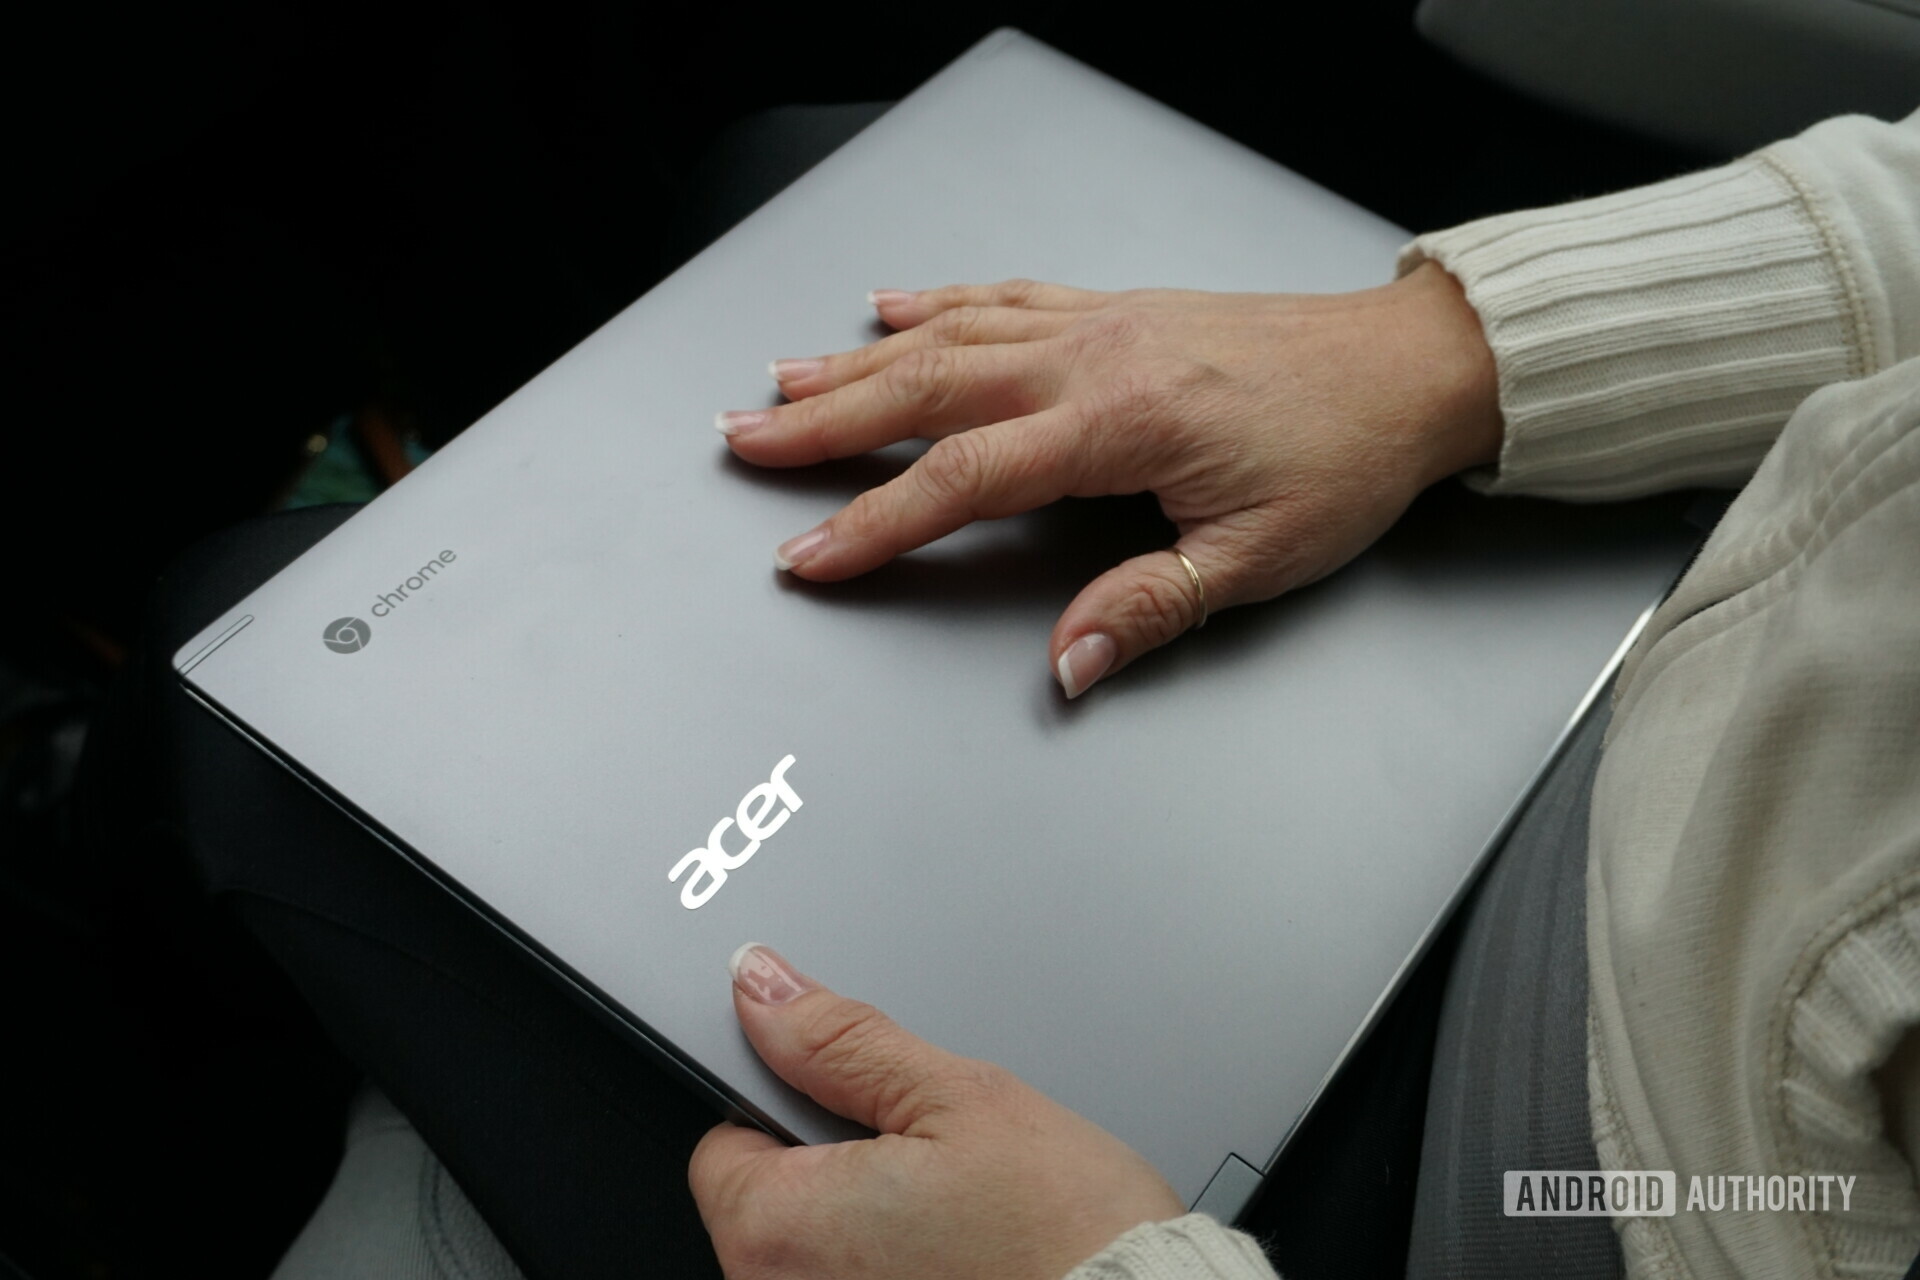 Acer Chromebook 13 held in hand